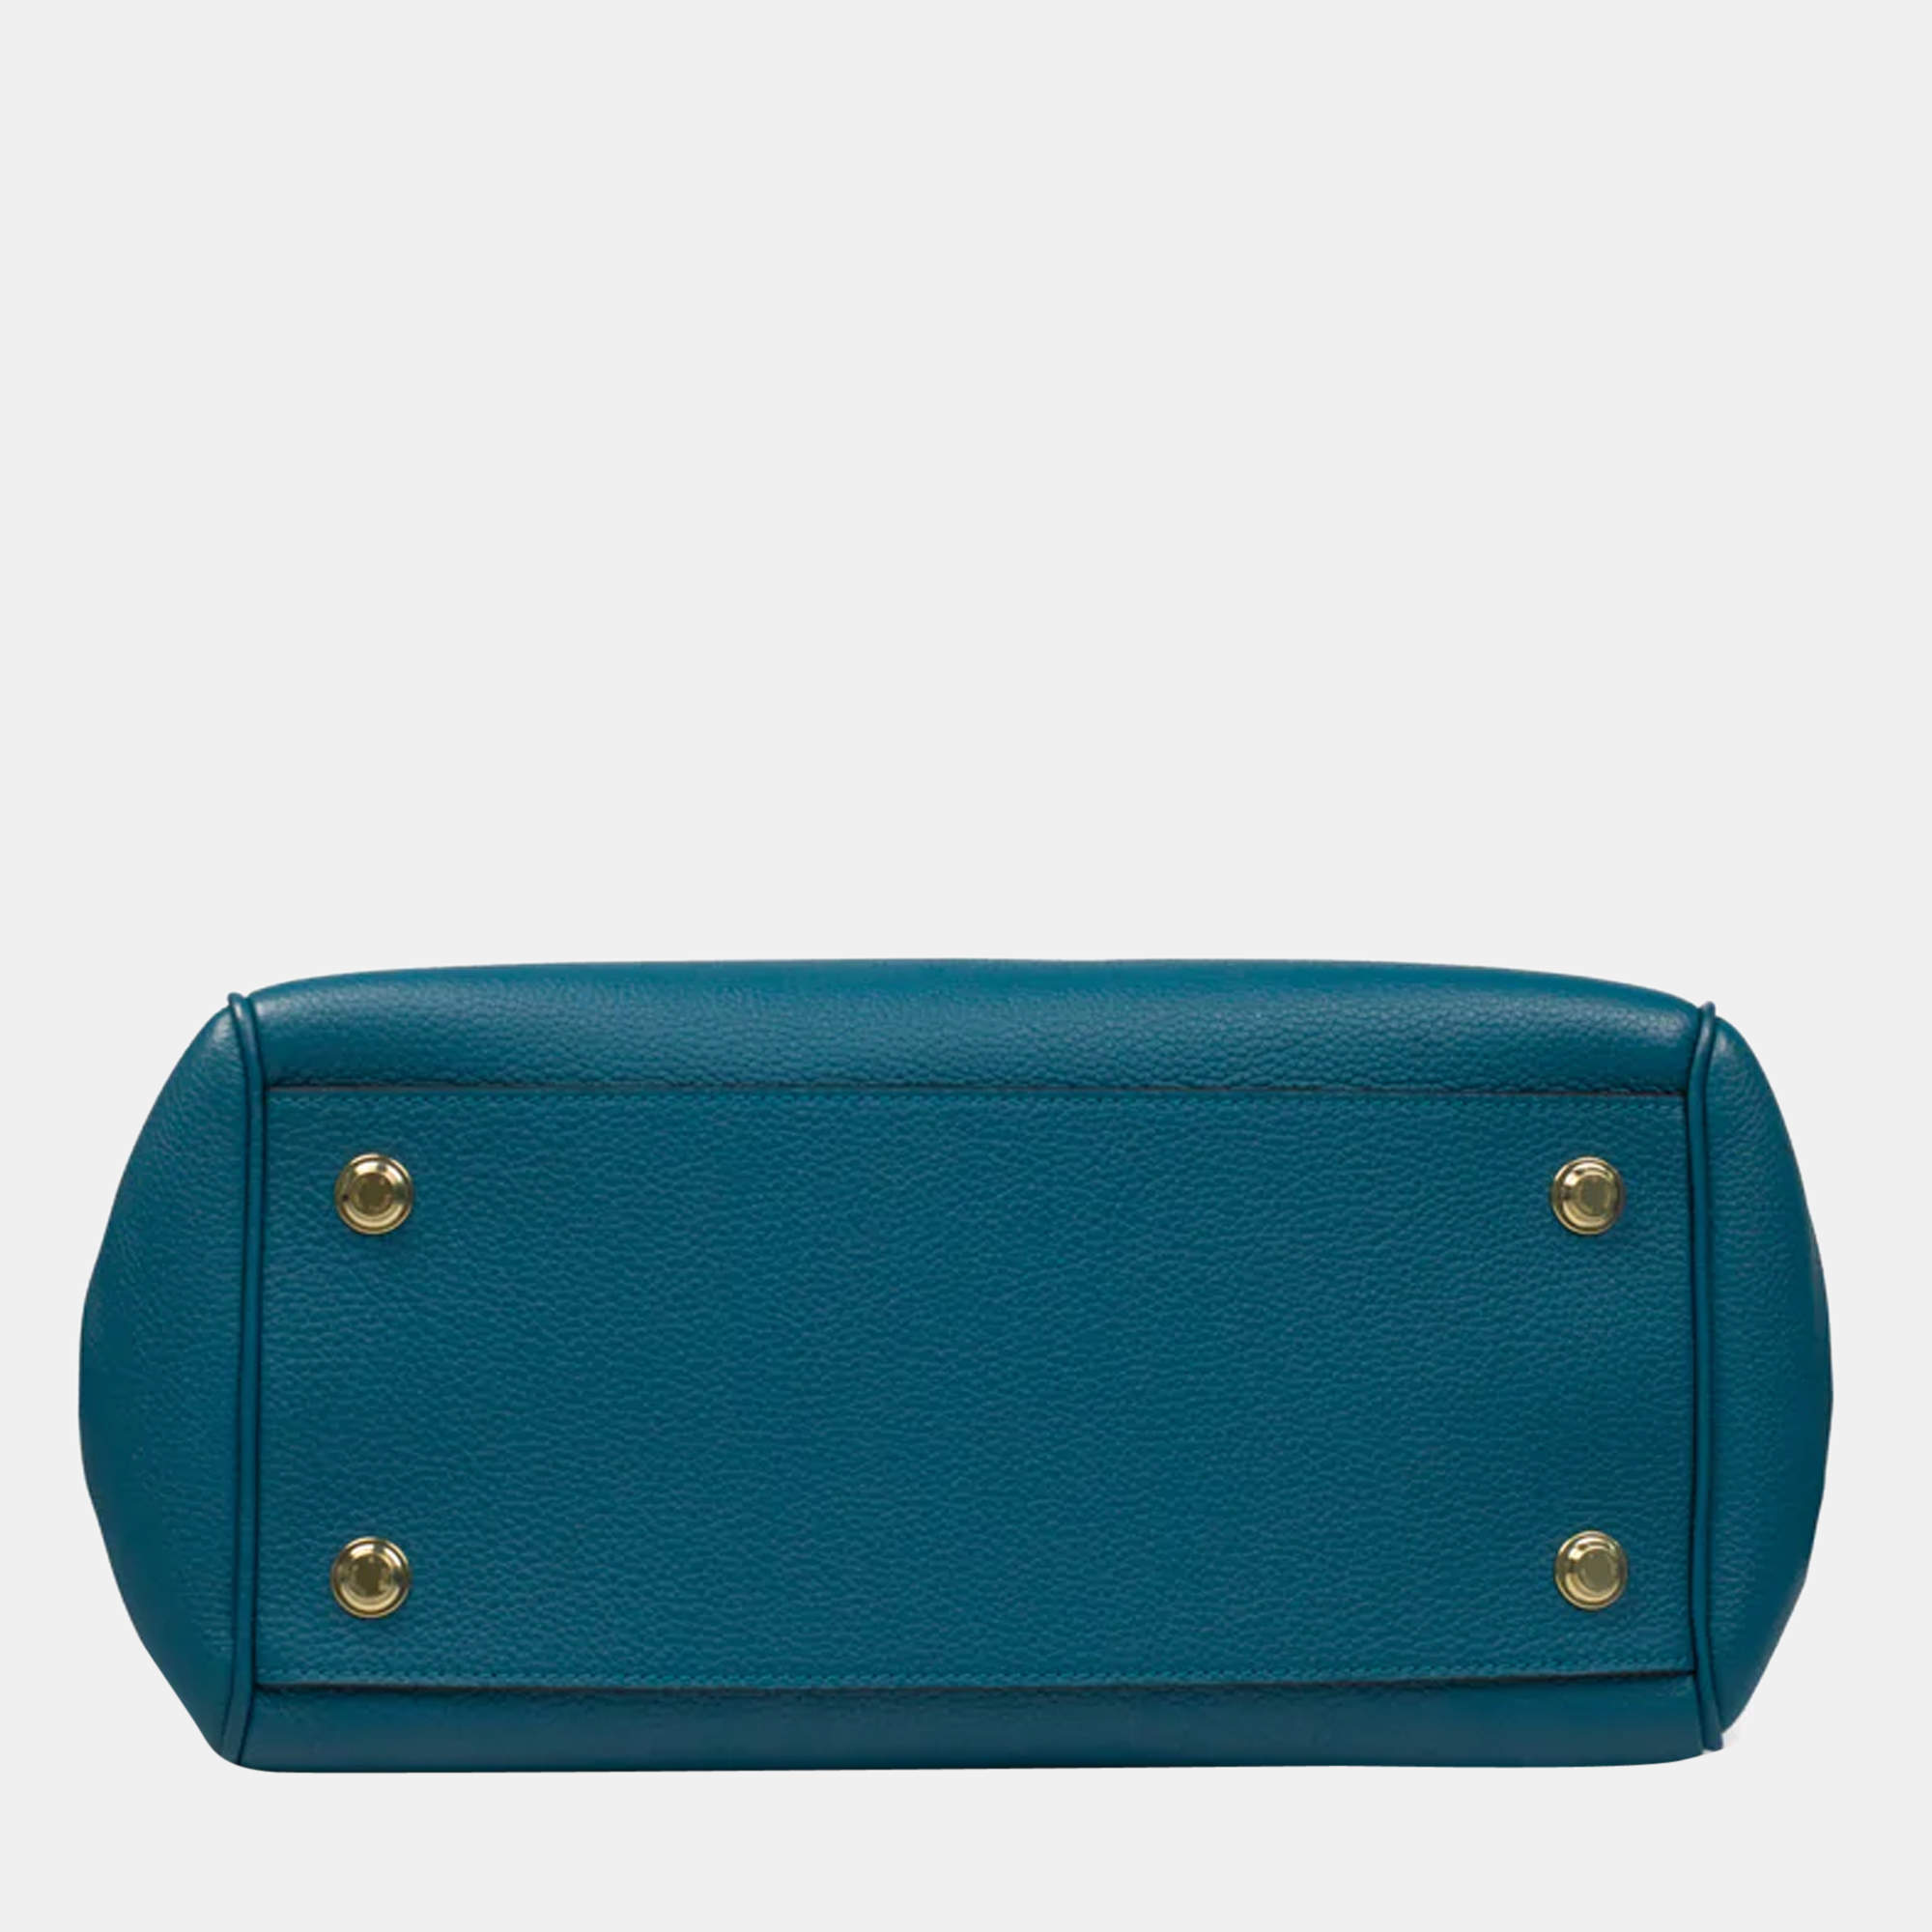 Louis Vuitton Milla MM Shoulder bag in Blue Leather